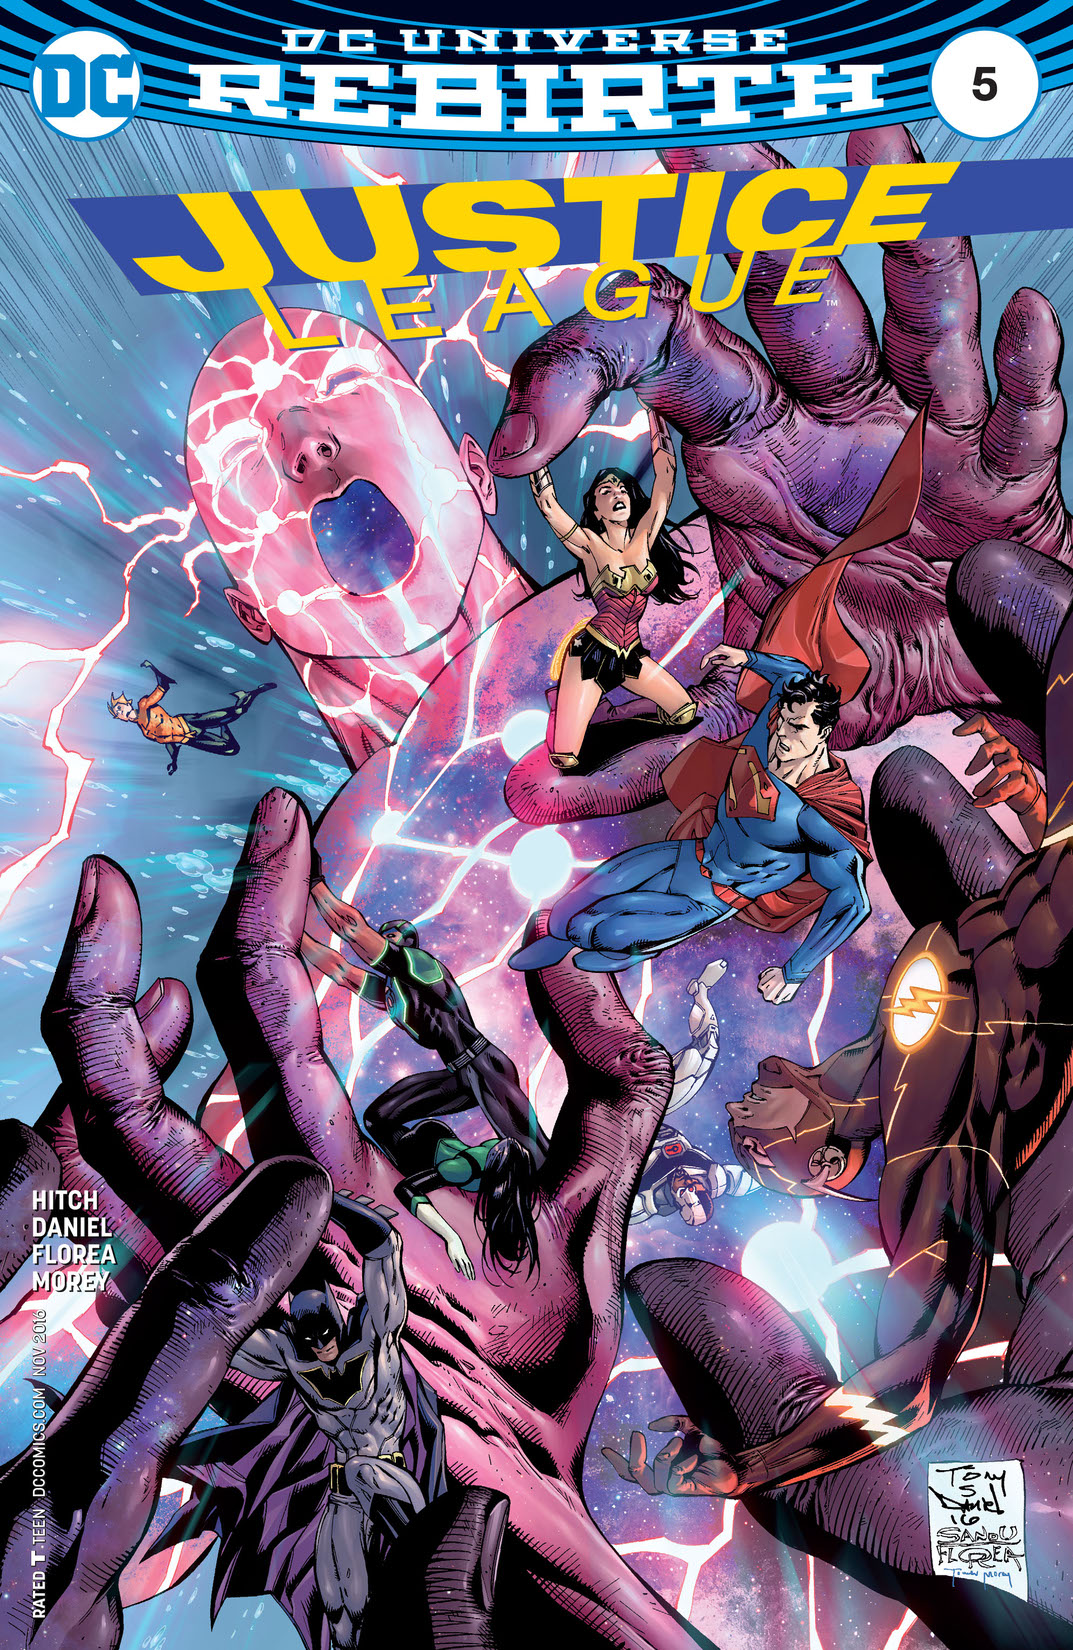 Justice League (2016-) #5 preview images